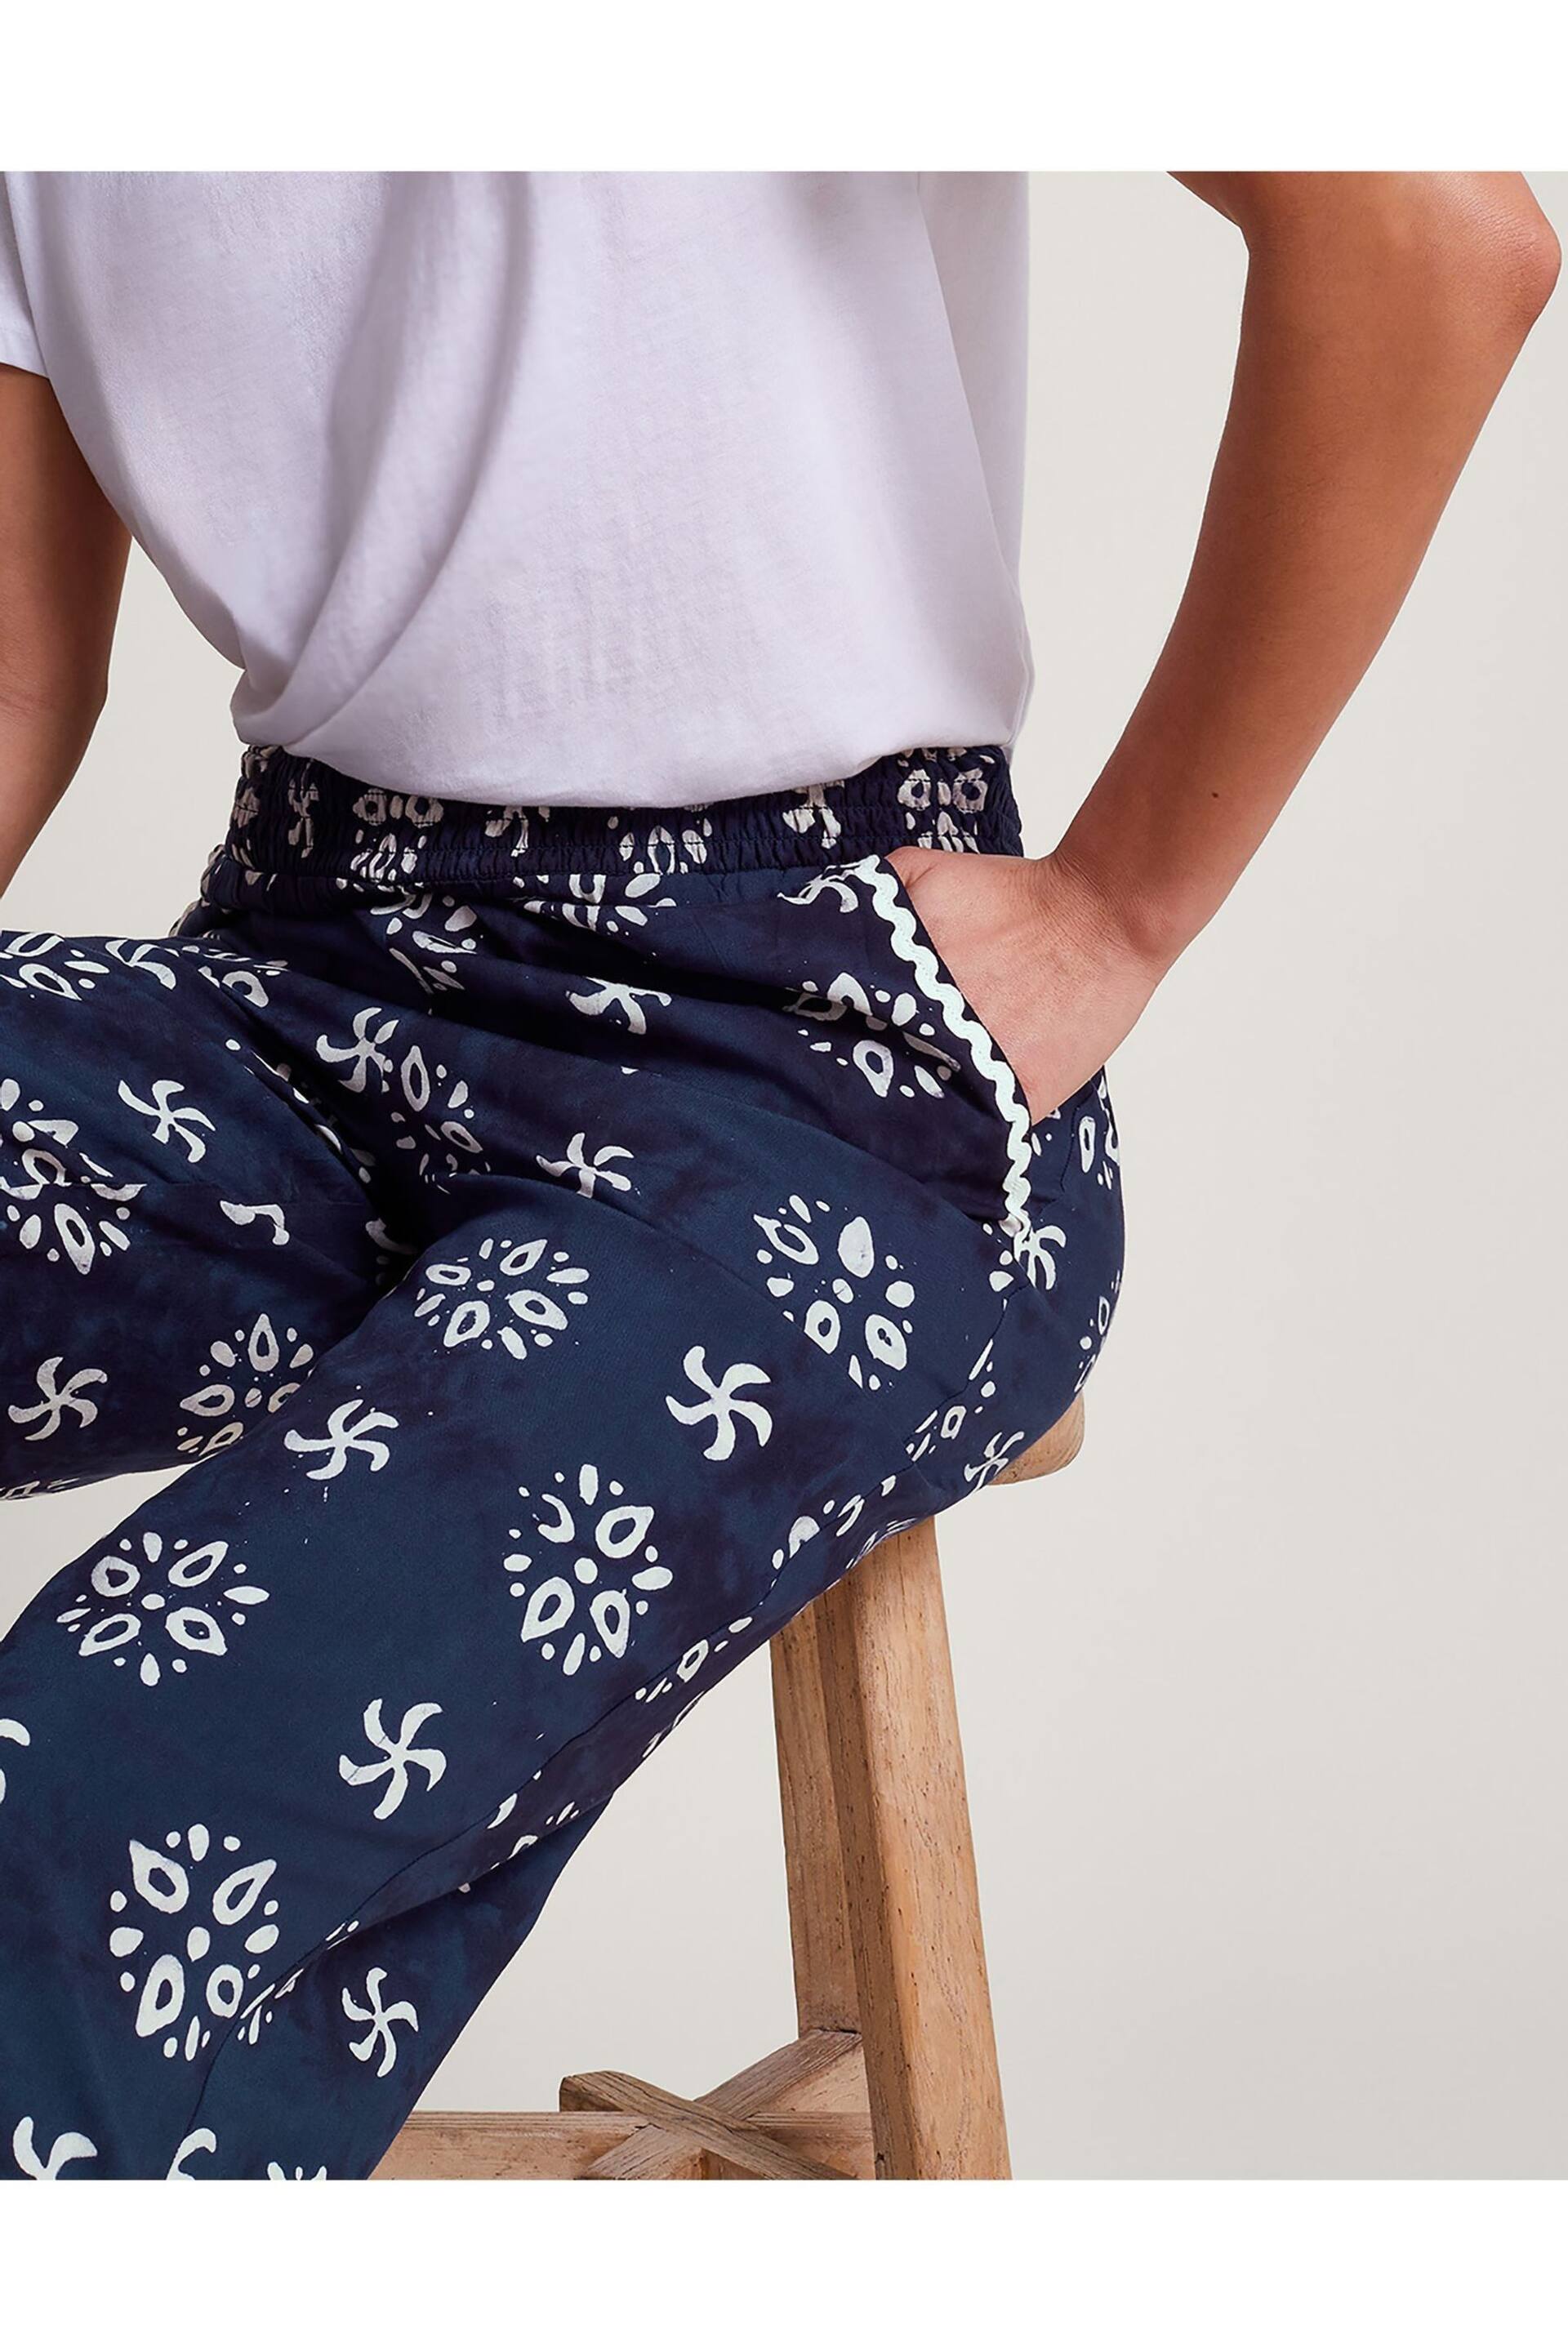 Monsoon Blue Loretta Batik Trousers - Image 2 of 4